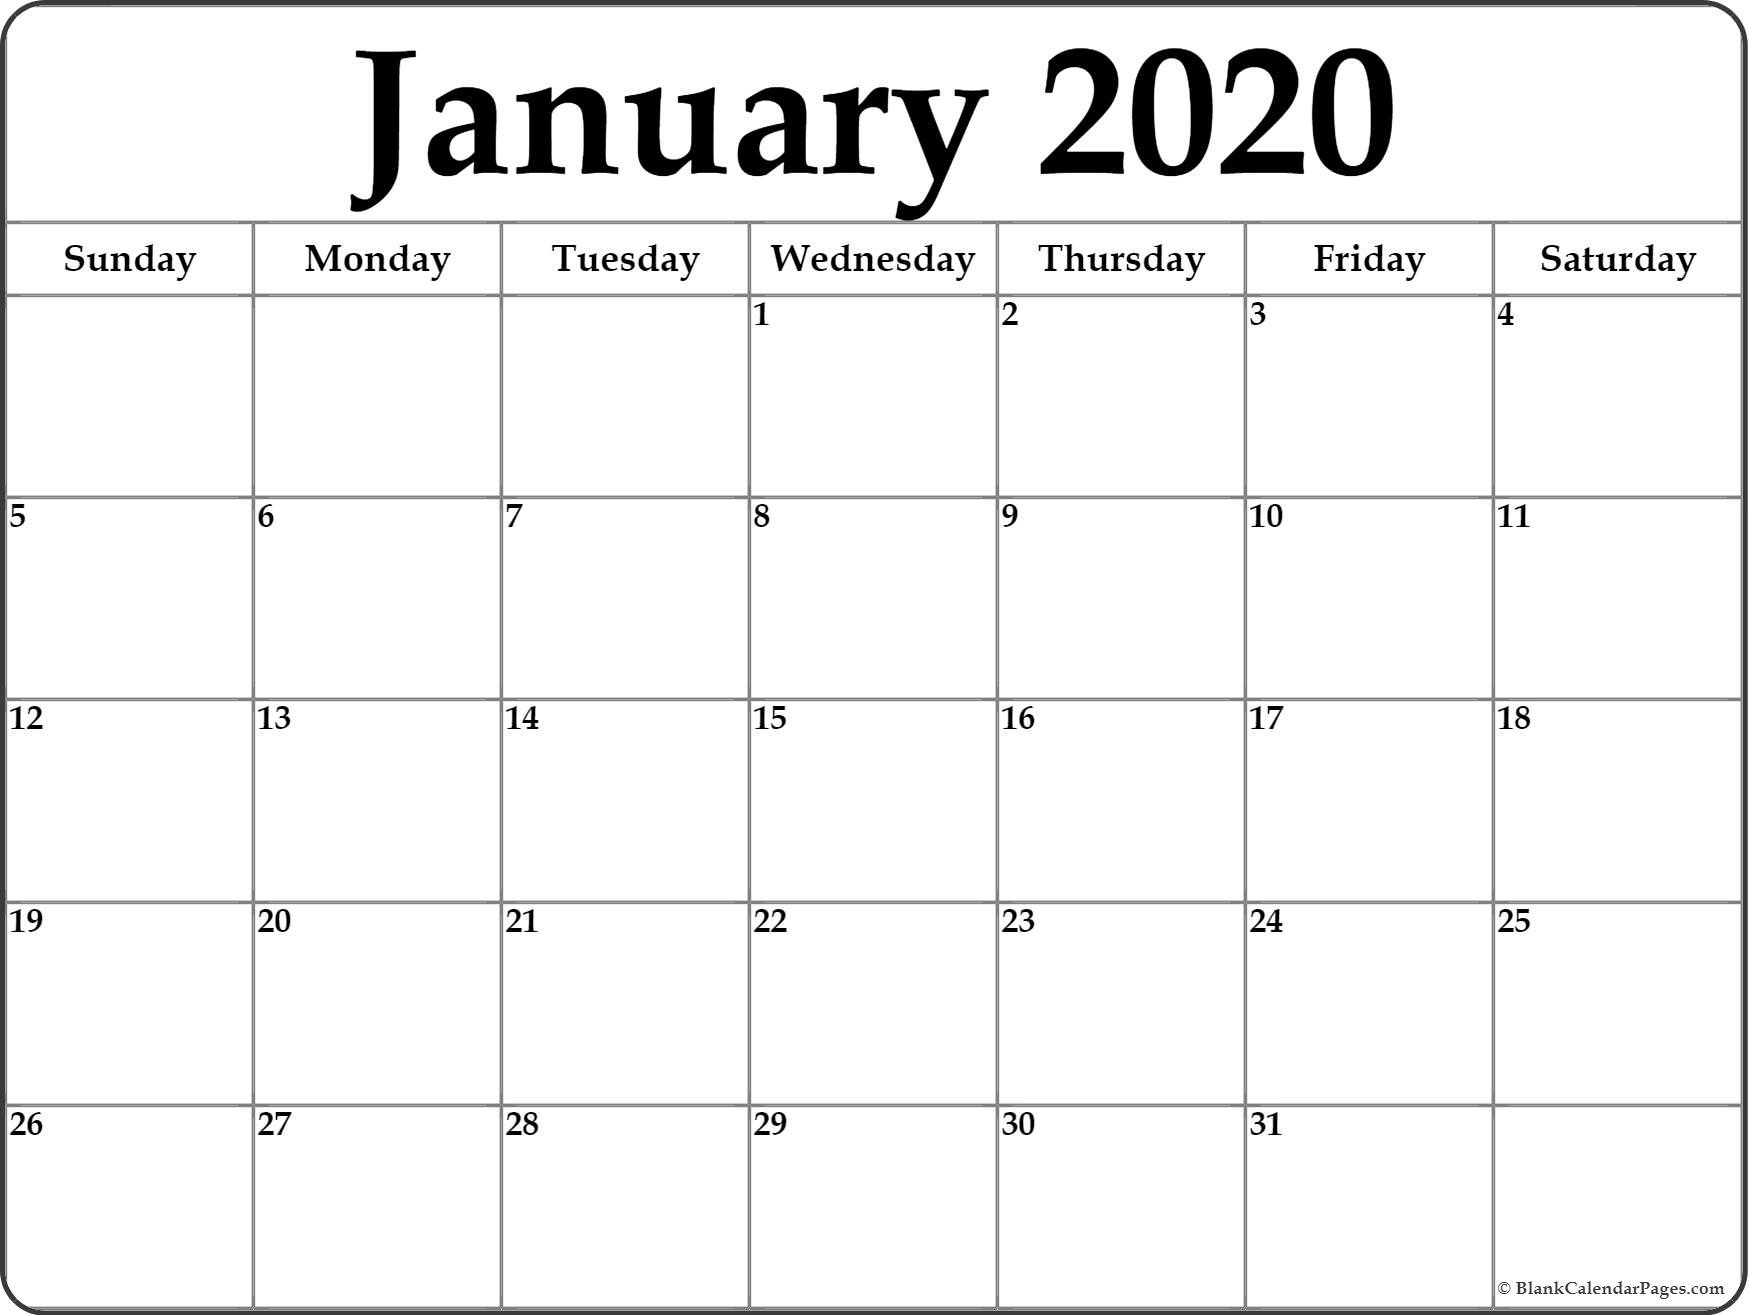 January 2020 Calendar | Free Printable Monthly Calendars  Free Monthly Calendar Print Out 2020 With Holidays